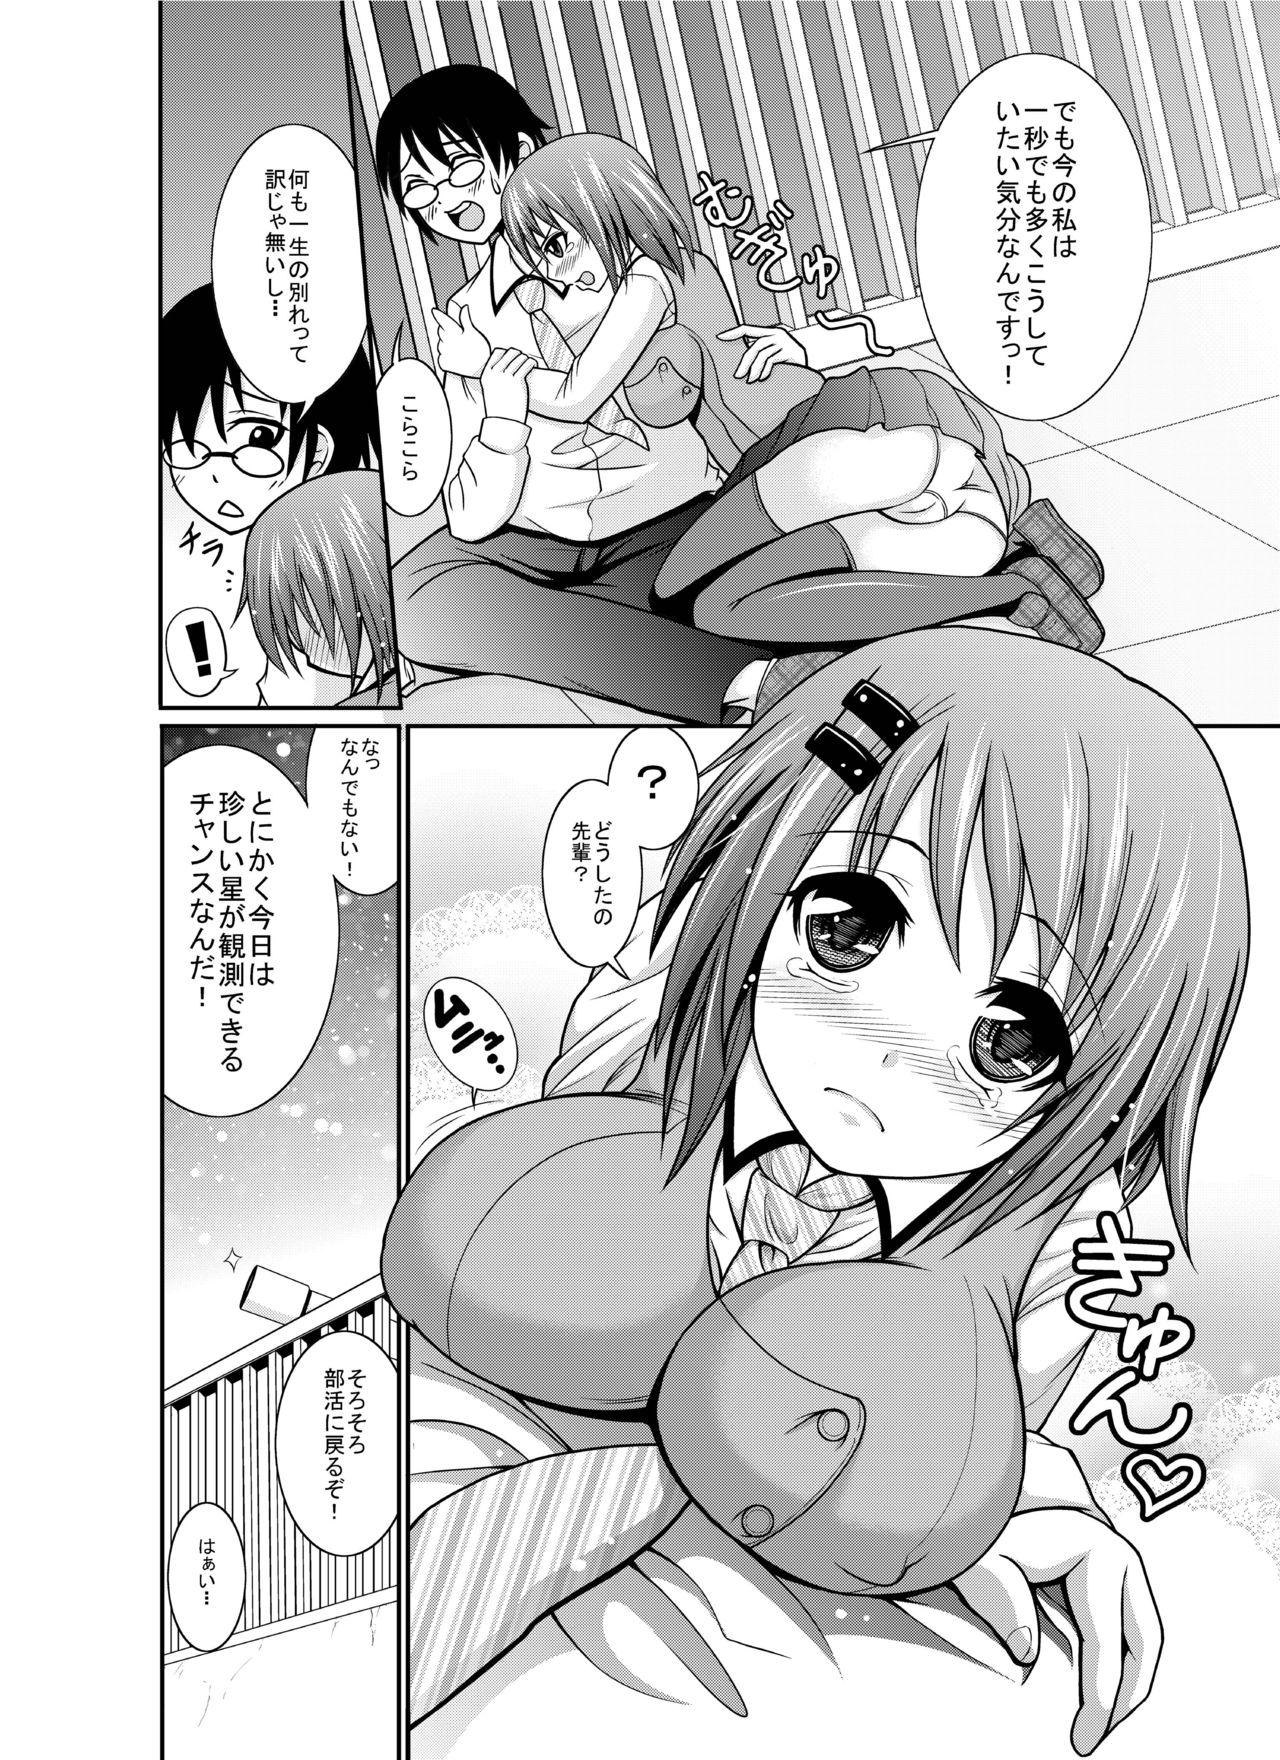 Longhair Senpai! Daite Kudasaii! - Original Scandal - Page 2